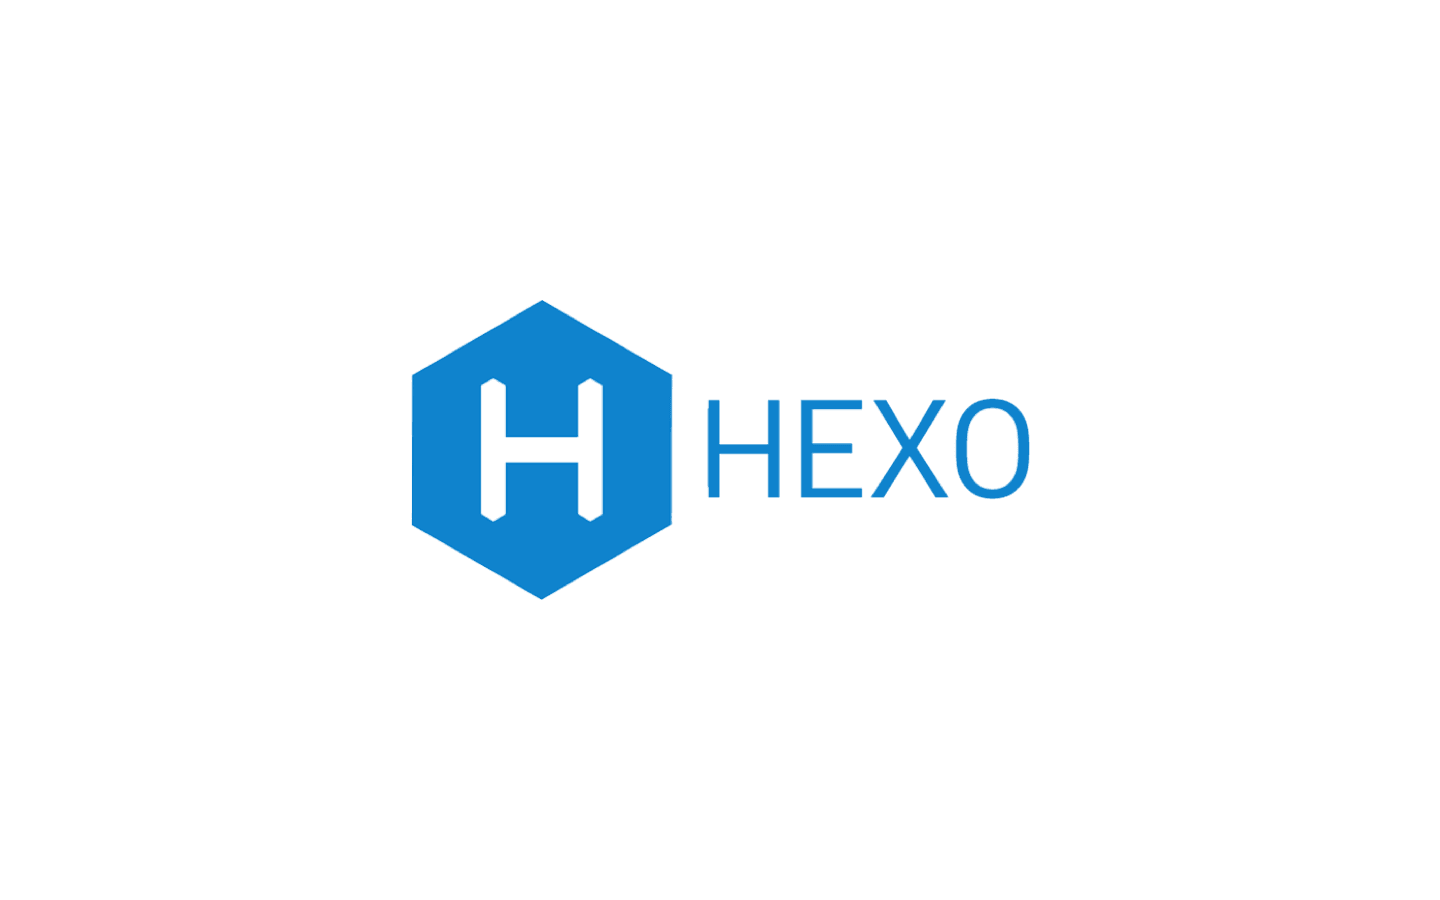 Hello Hexo